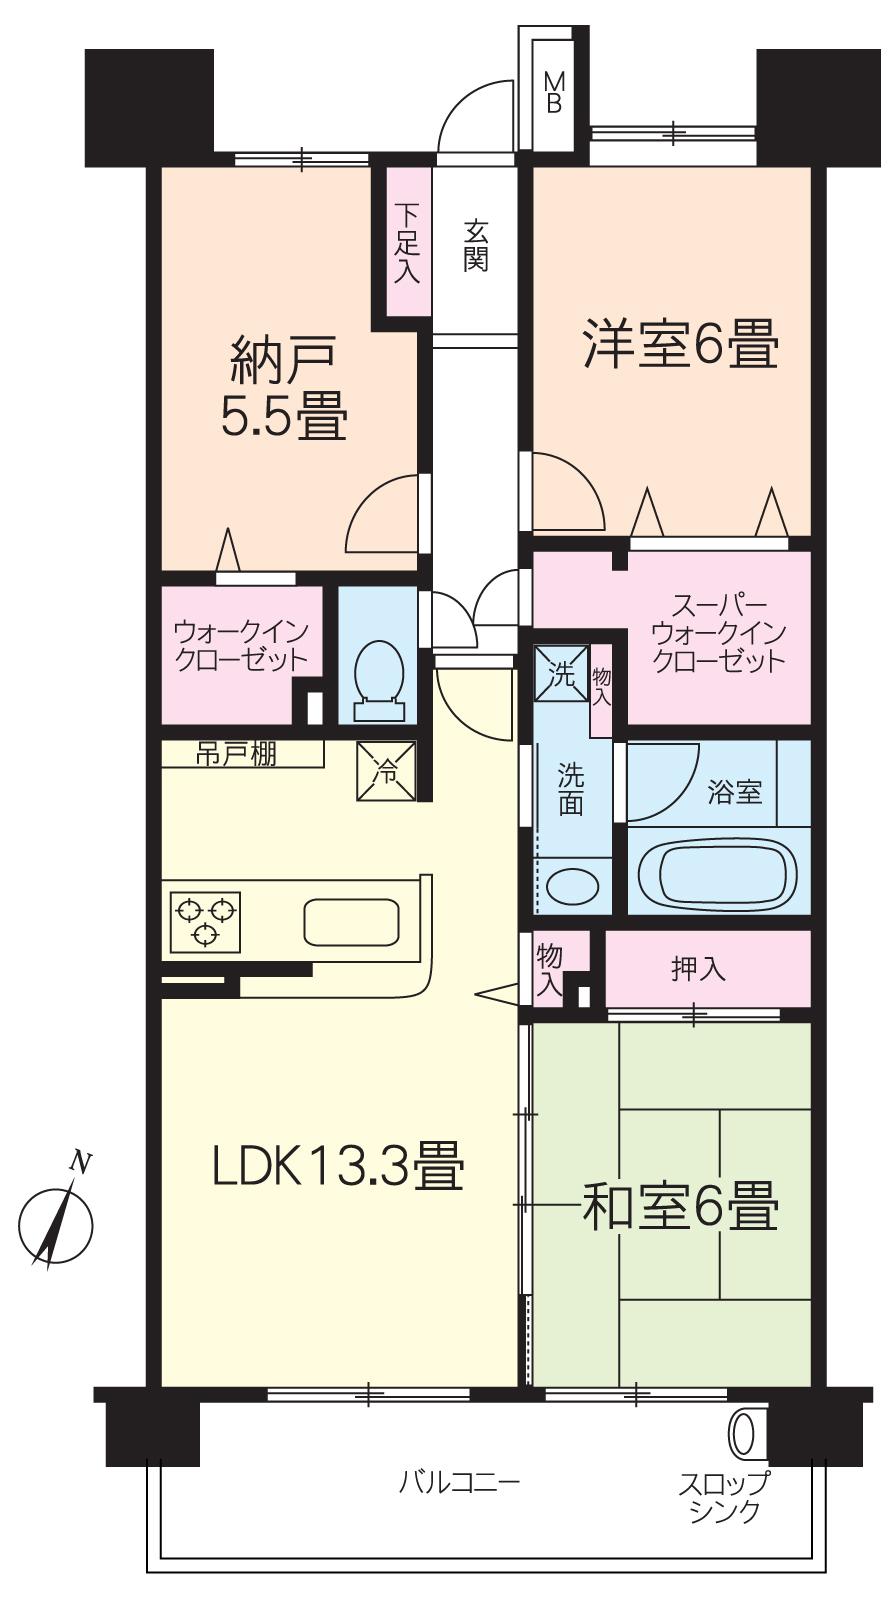 Floor plan. 2LDK + S (storeroom), Price 18,800,000 yen, Occupied area 70.76 sq m , Balcony area 12.2 sq m